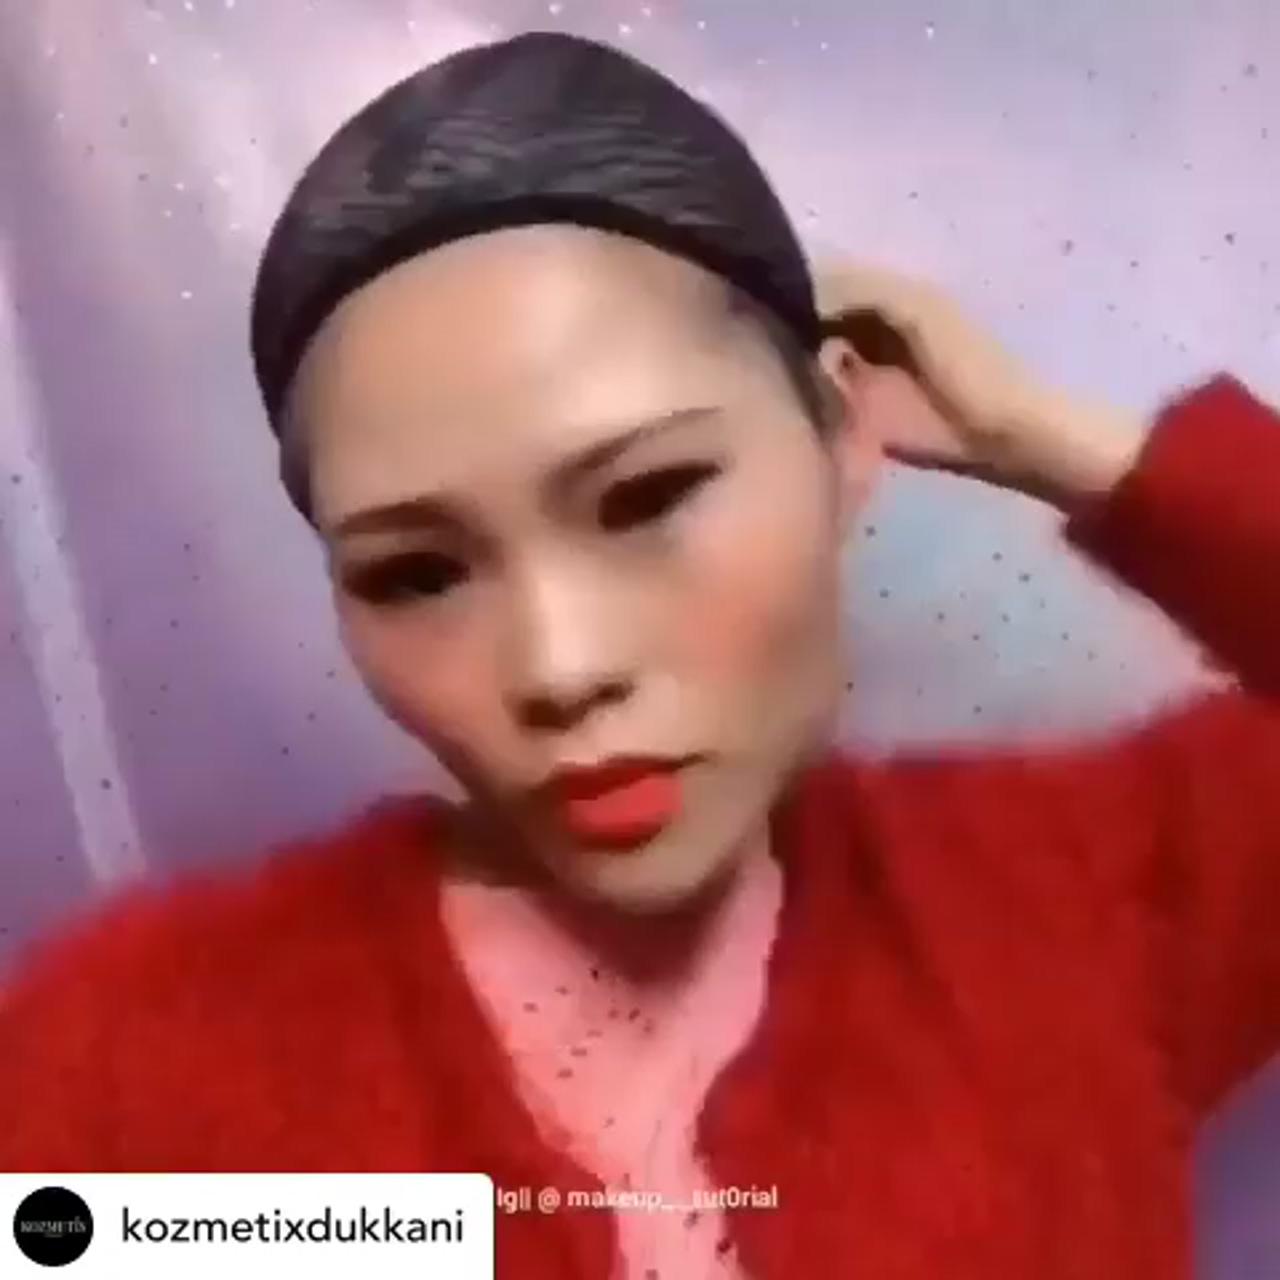  prinbsbeauty; makeup videos